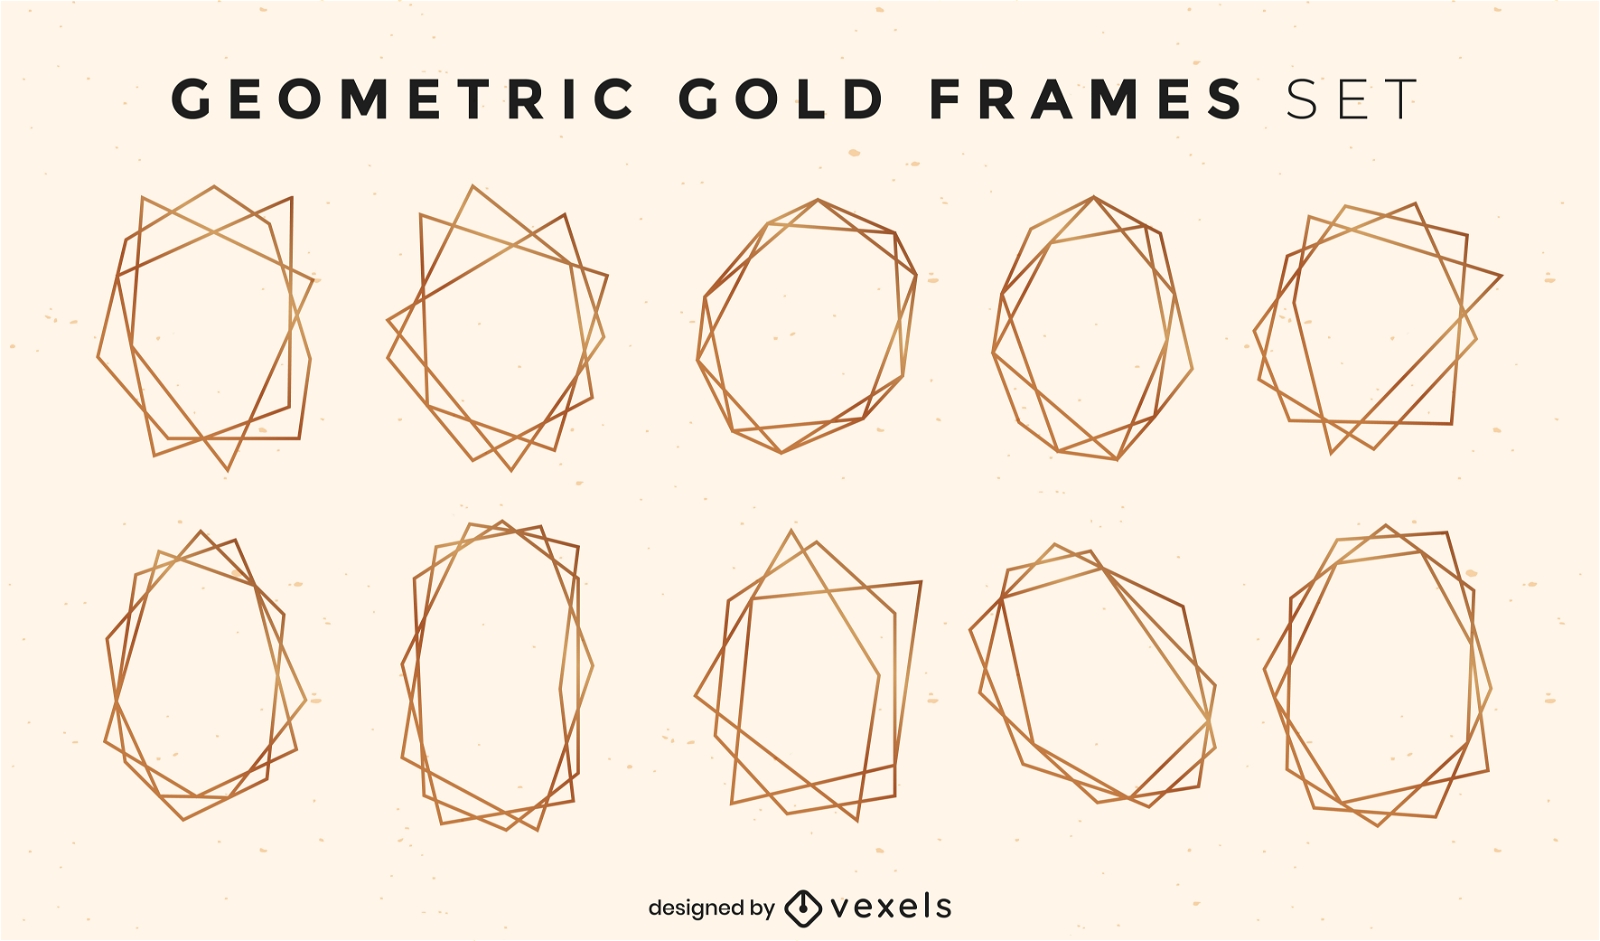 Golden geometric style frames decoration set